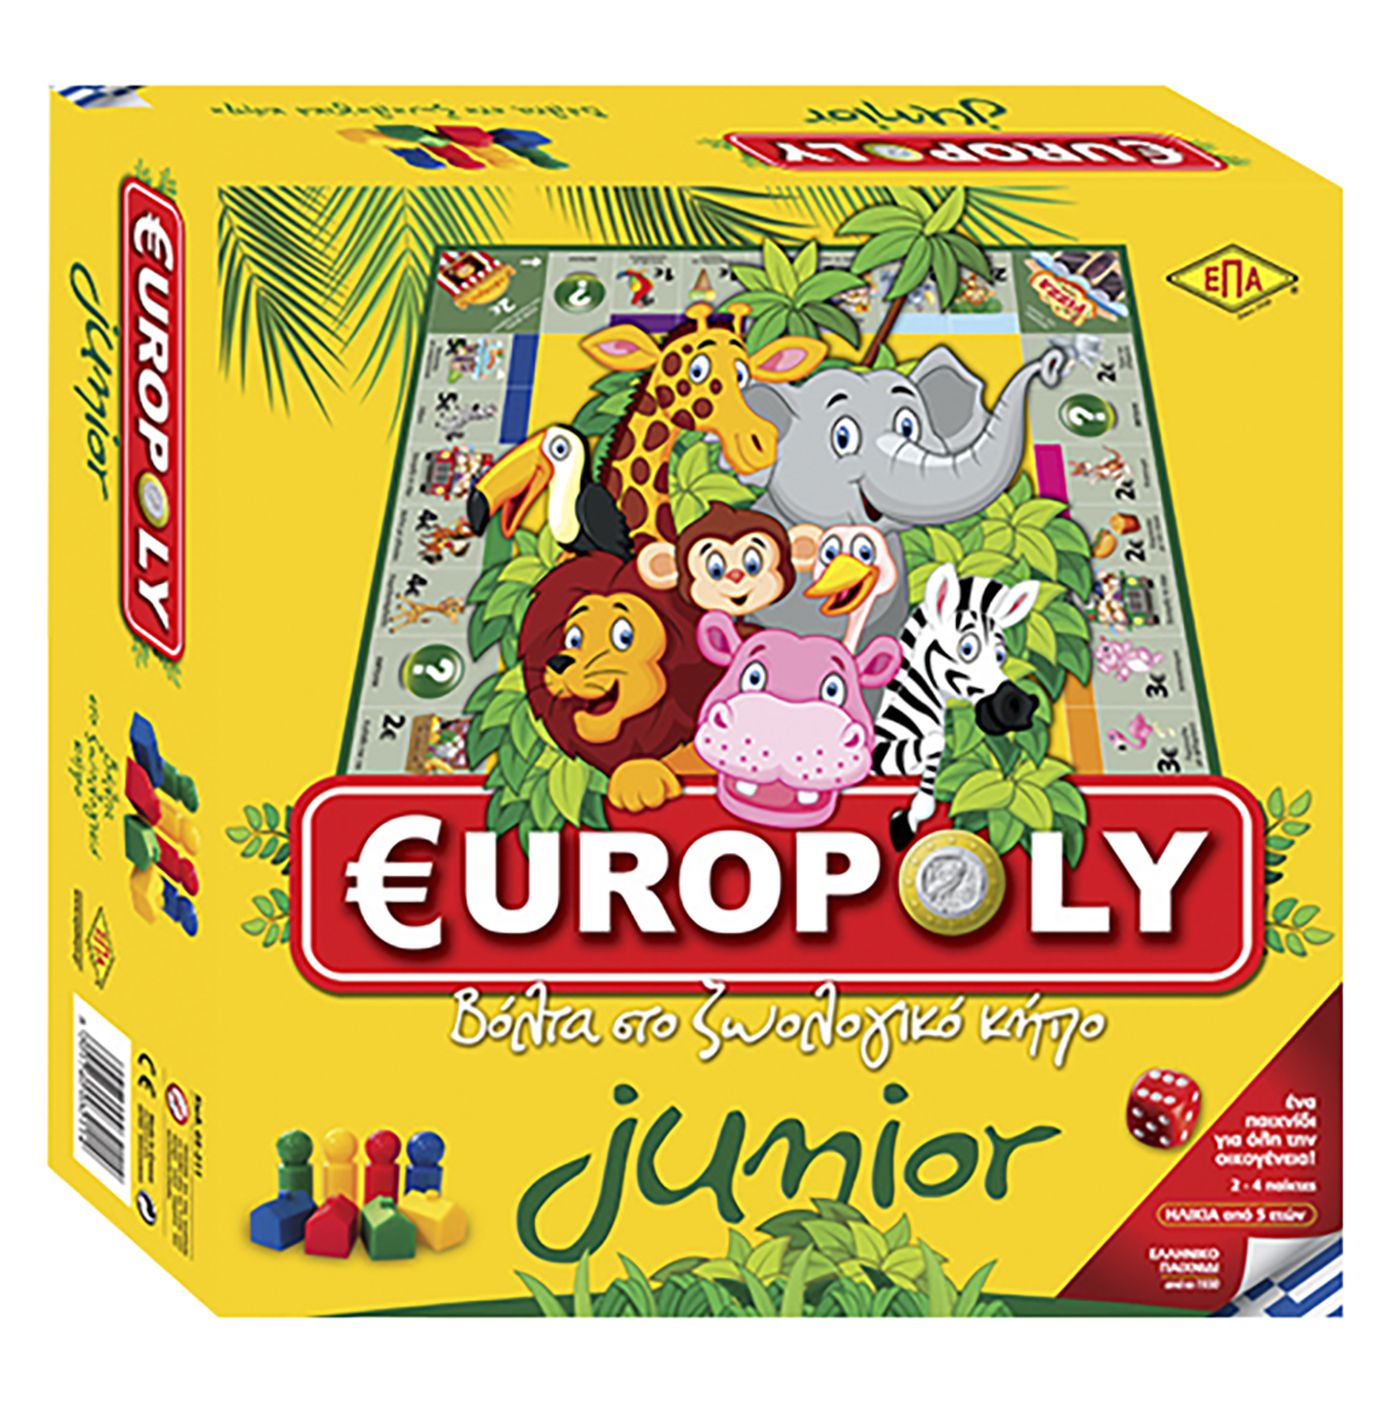 69-141 EUROPOLY JUNIOR 27x27cm χονδρική, Παιχνίδια χονδρική